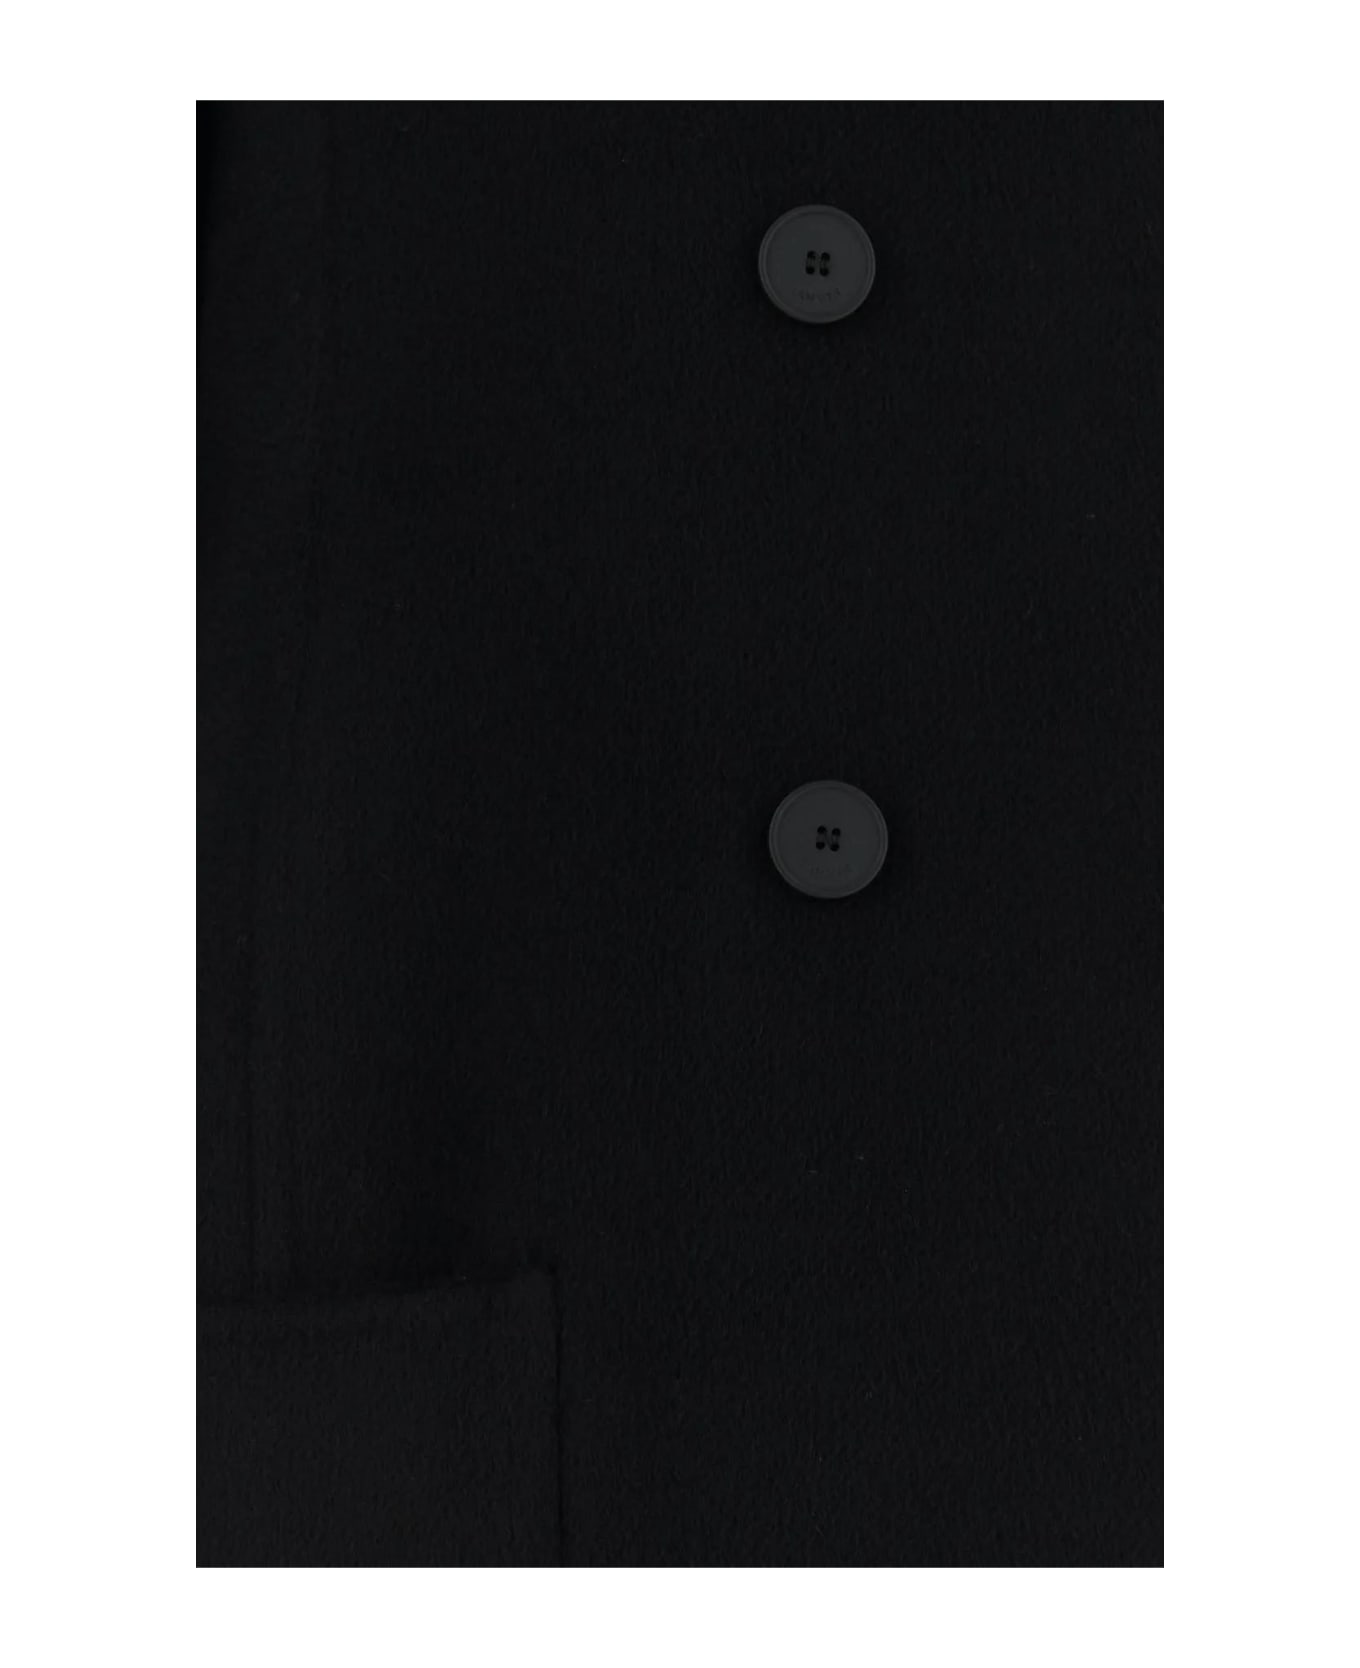 Lanvin Black Cashmere Coat - Black レインコート